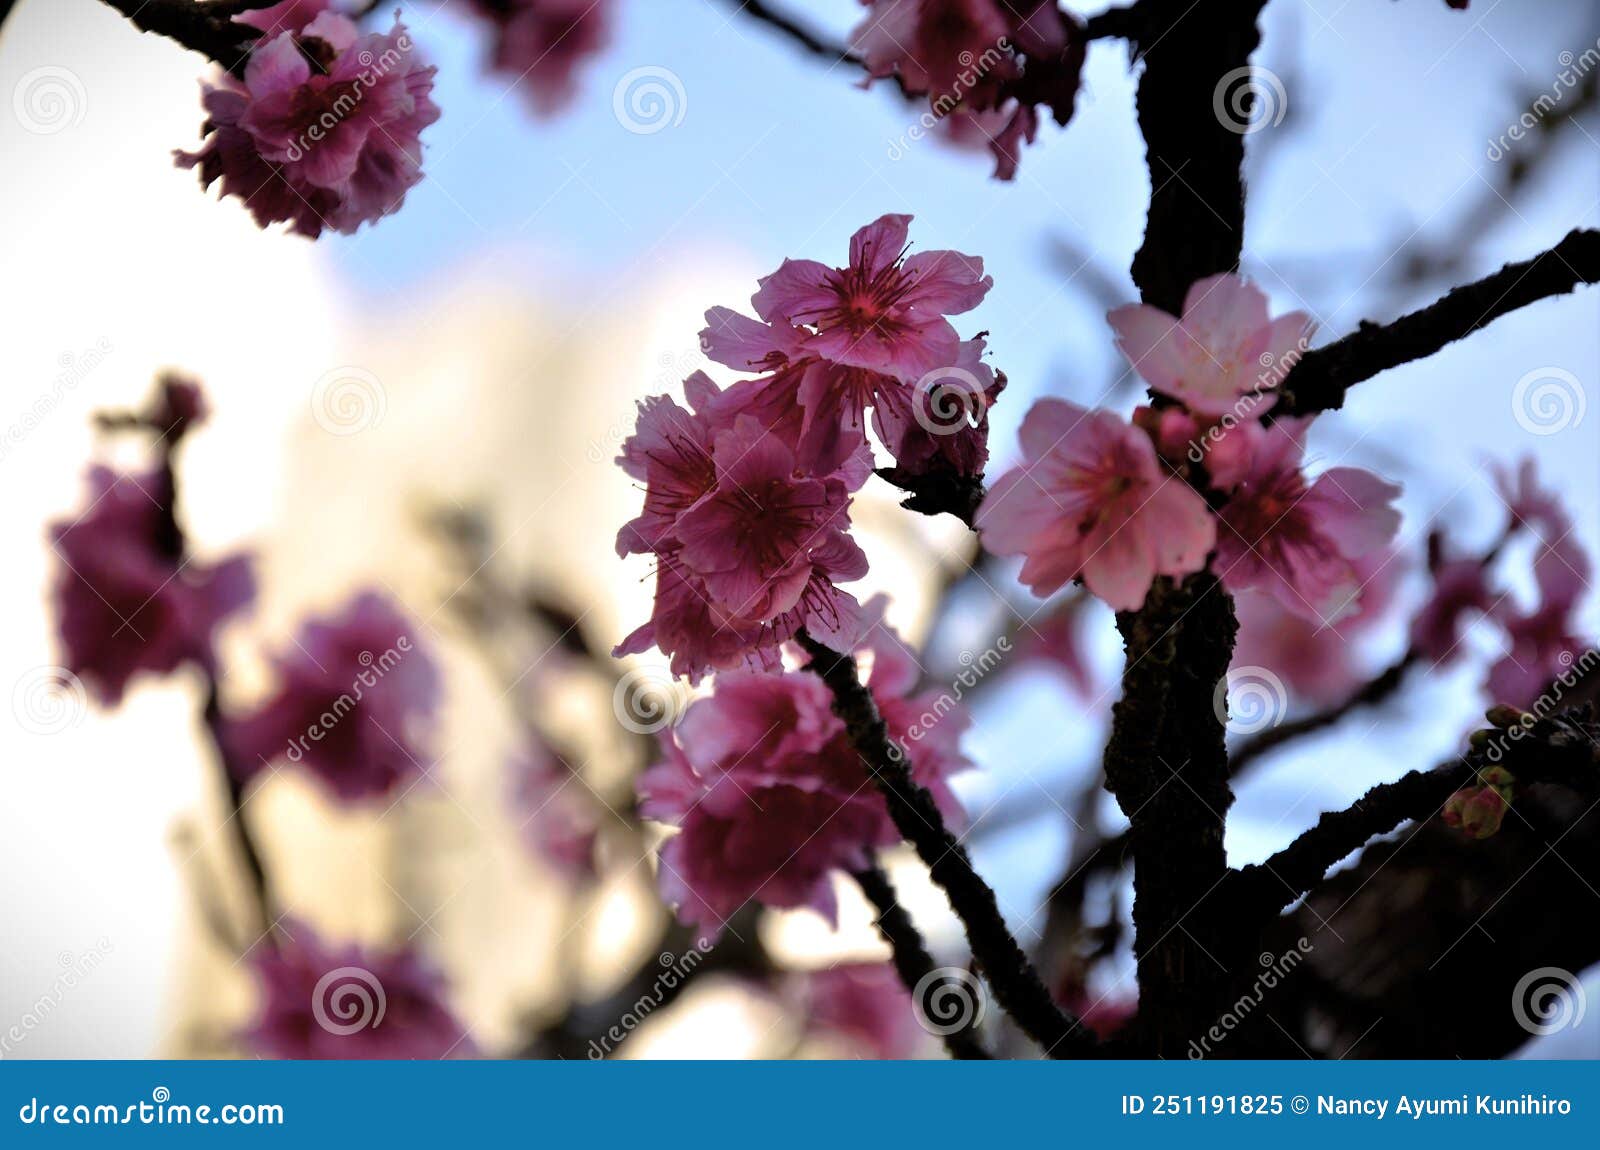 yamazakura cherry blossom in the late afternoon